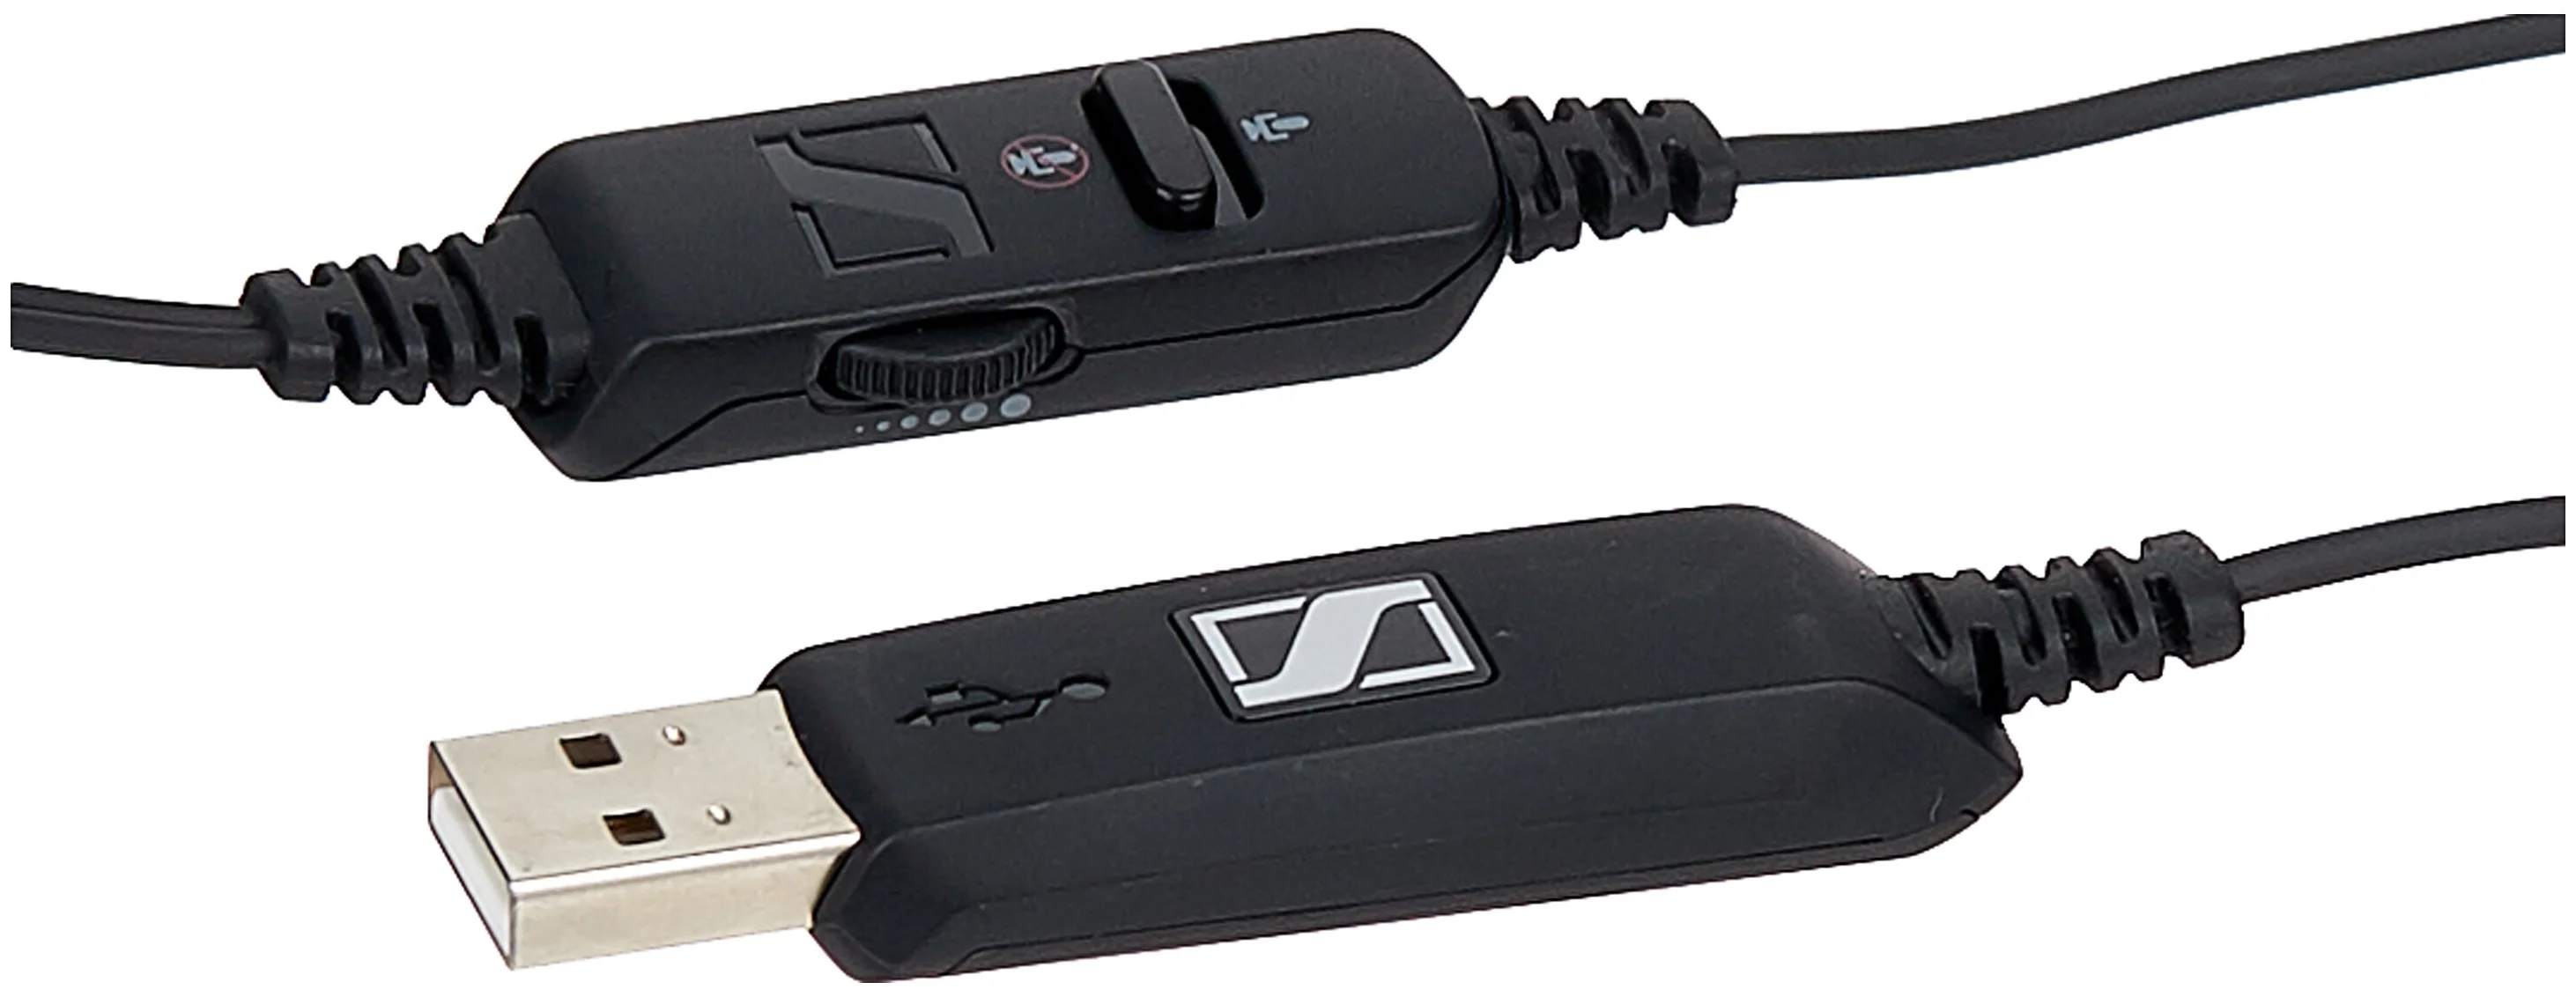 Sennheiser PC 8 USB - частота воспроизведения 42-17000 Гц